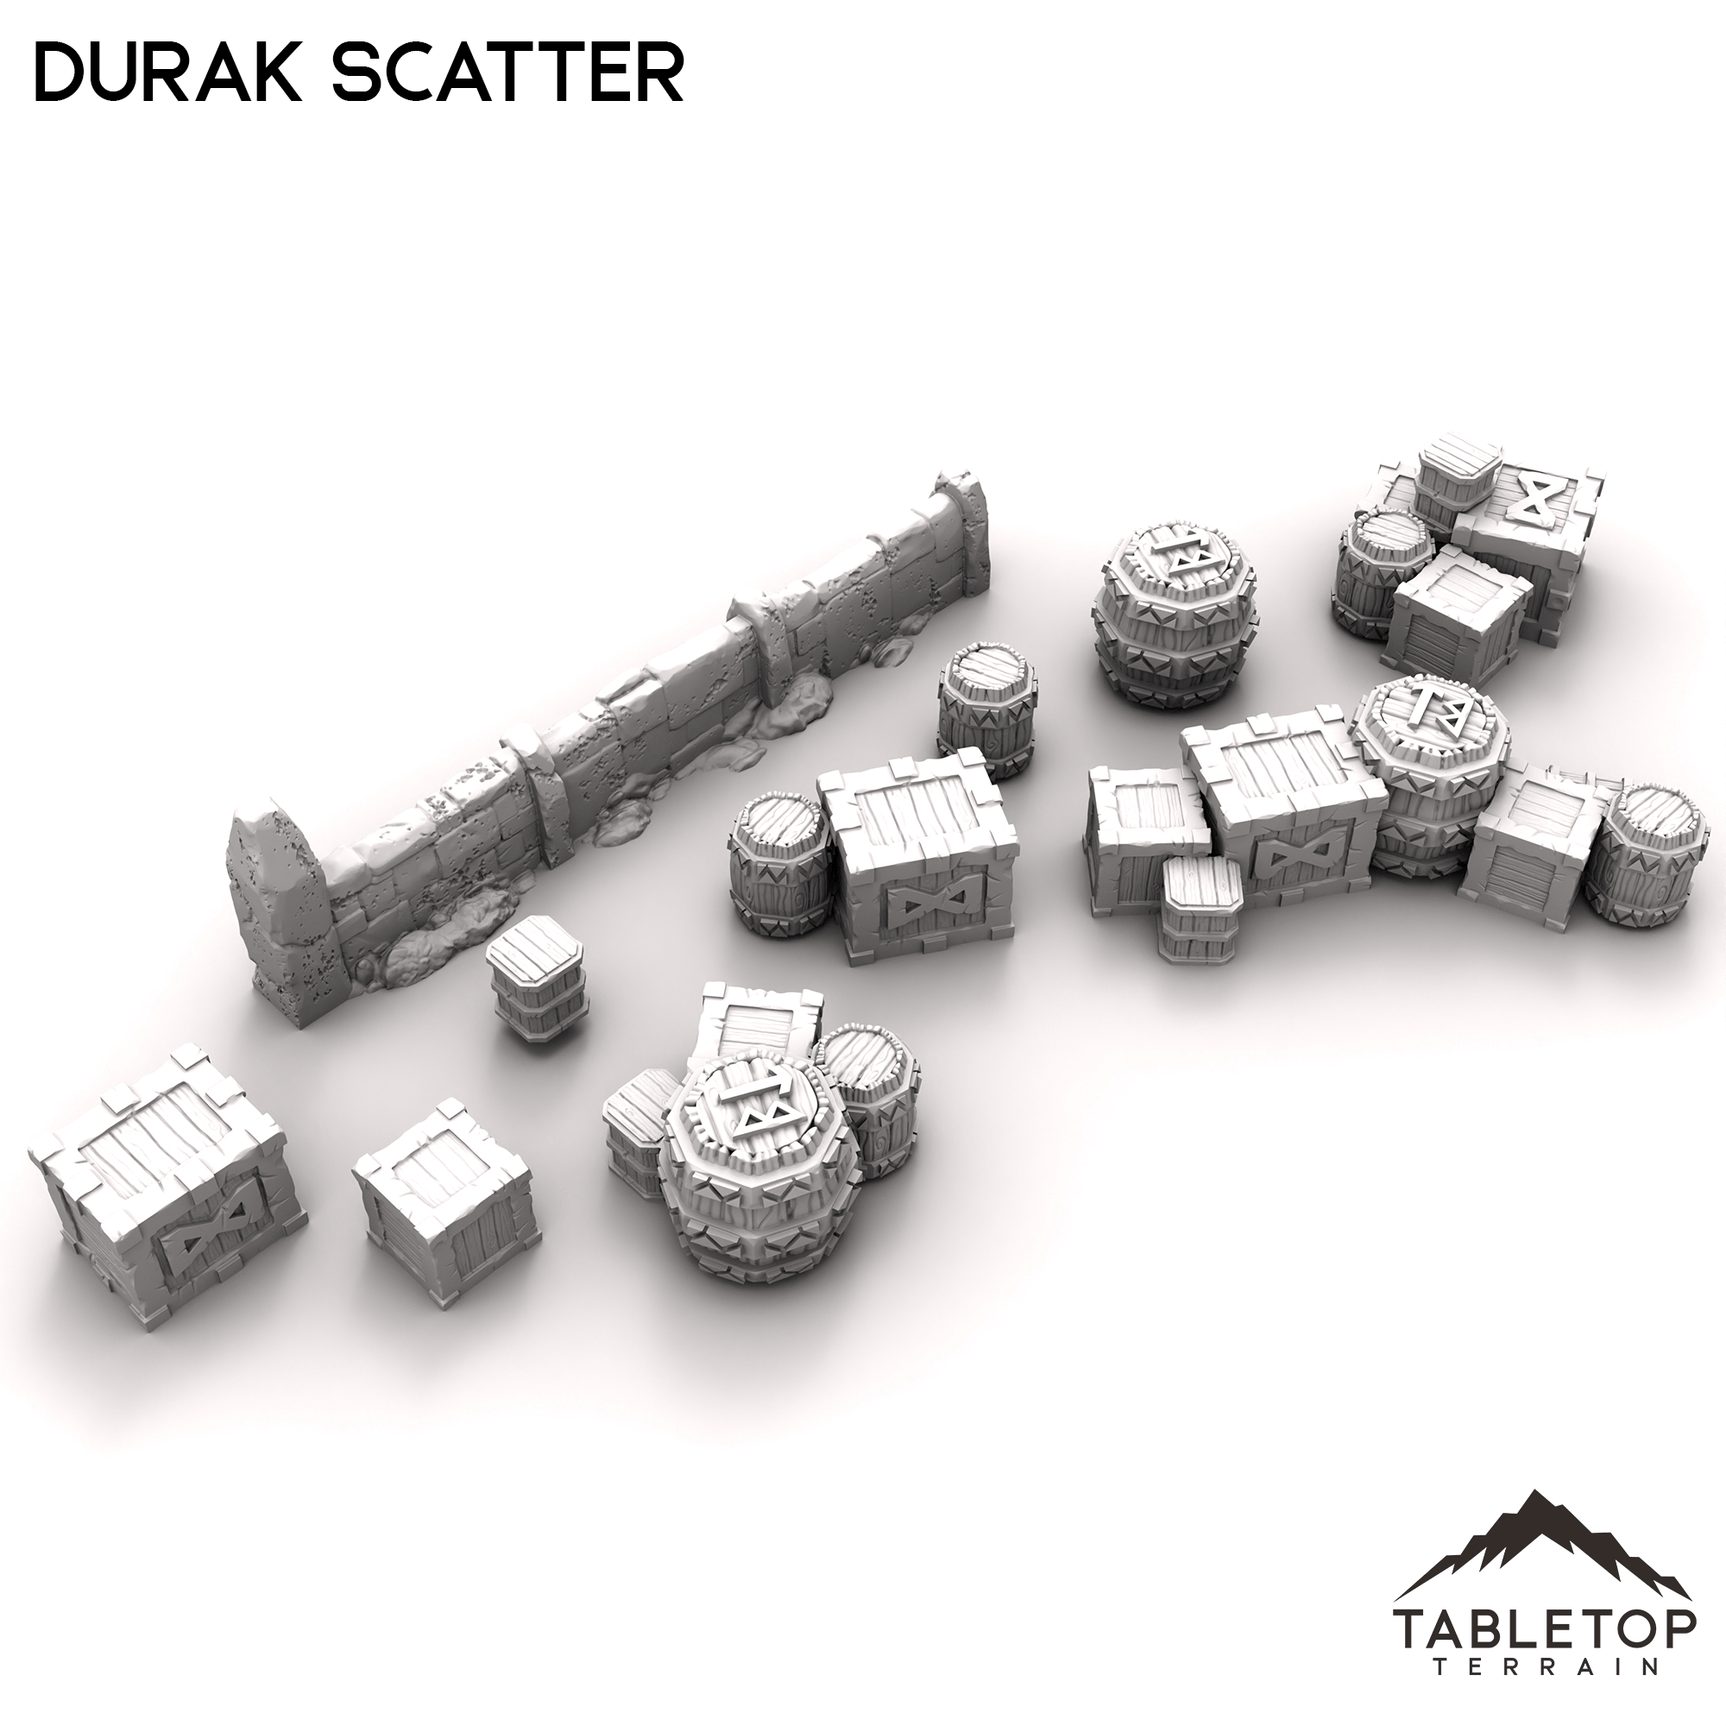 Scatter - Kingdom of Durak Deep